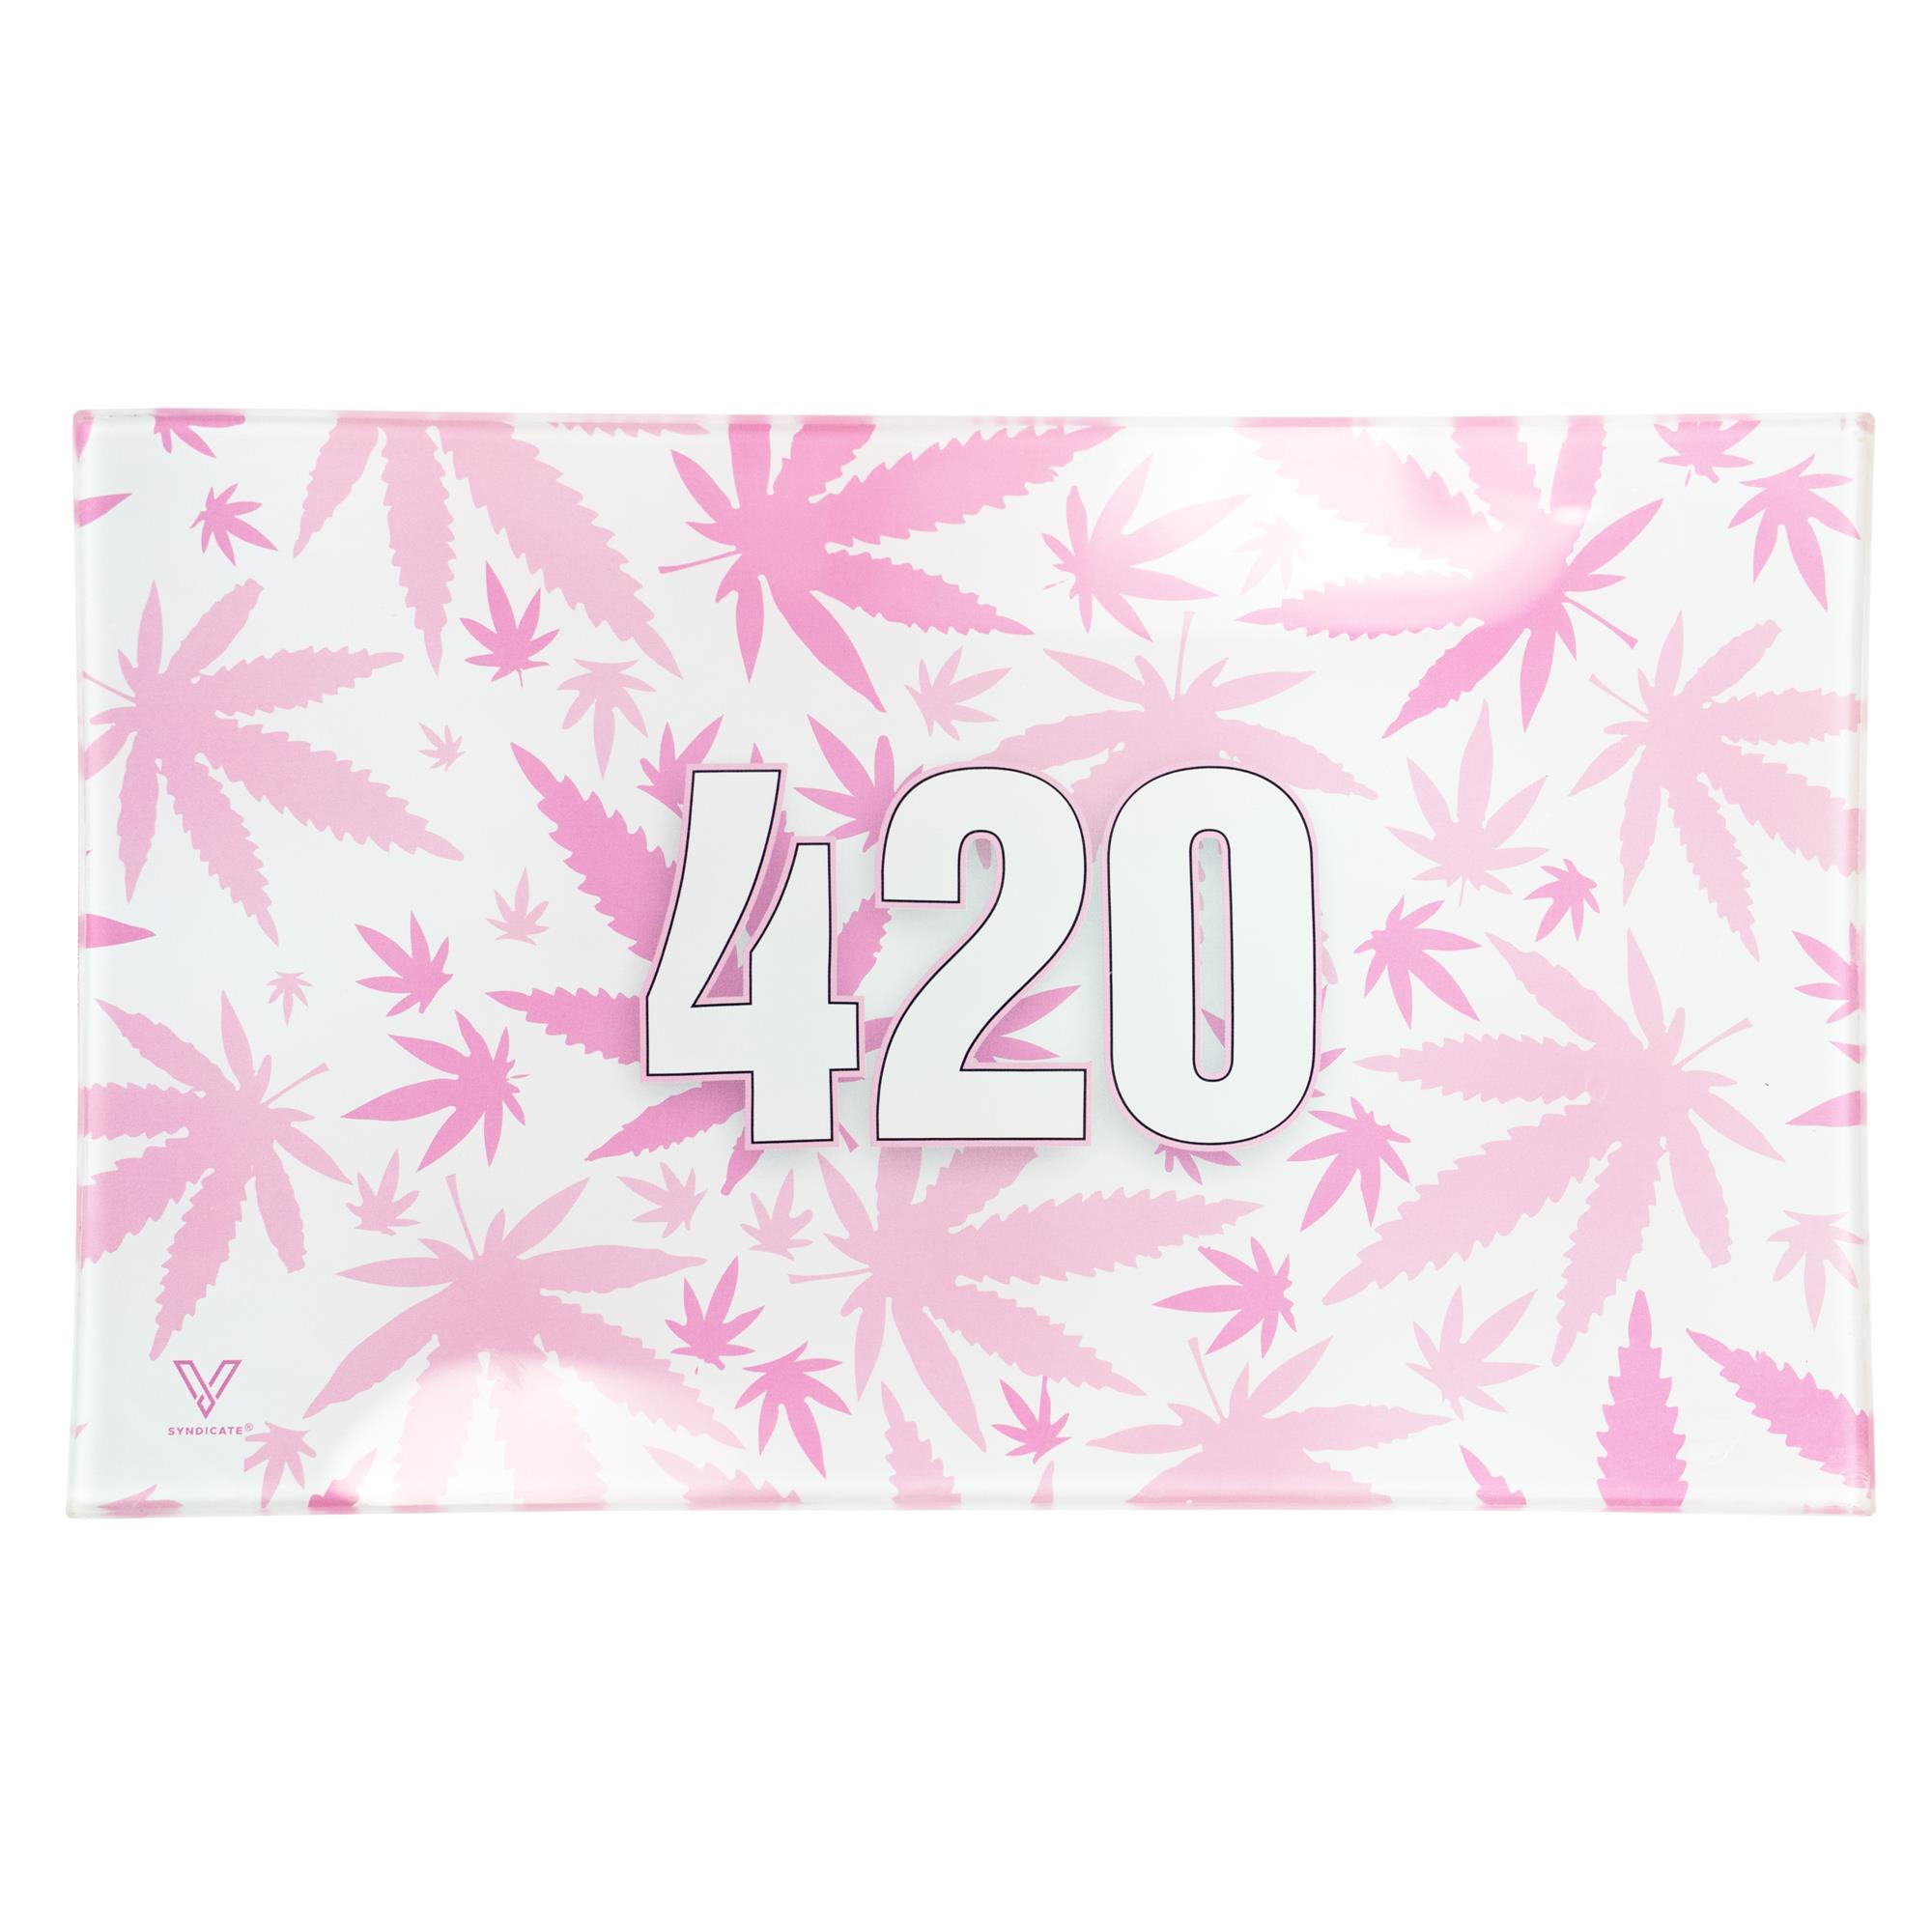 420 PINK GLASS TRAY